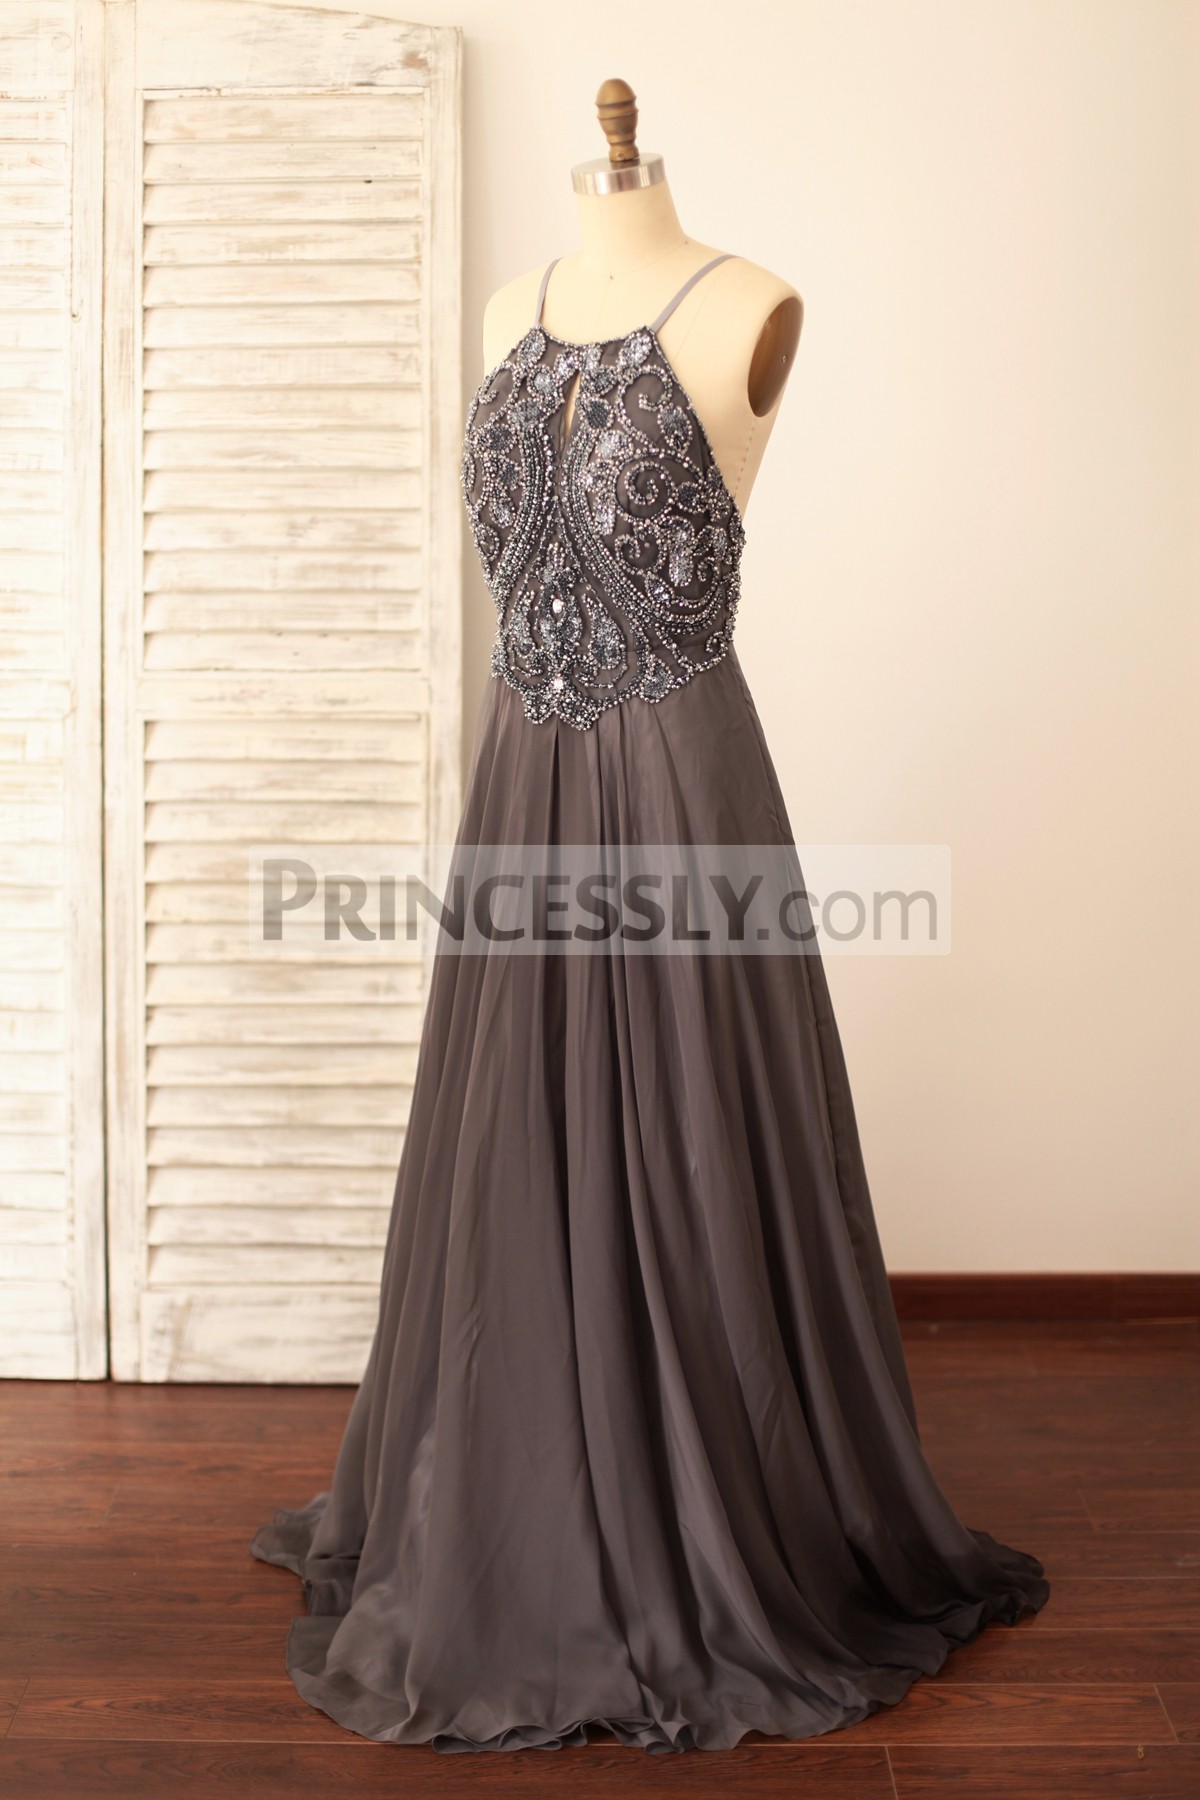 Princessly.com-K1000092-Spaghetti Straps Gray Chiffon Backless Beaded Prom Dress-31